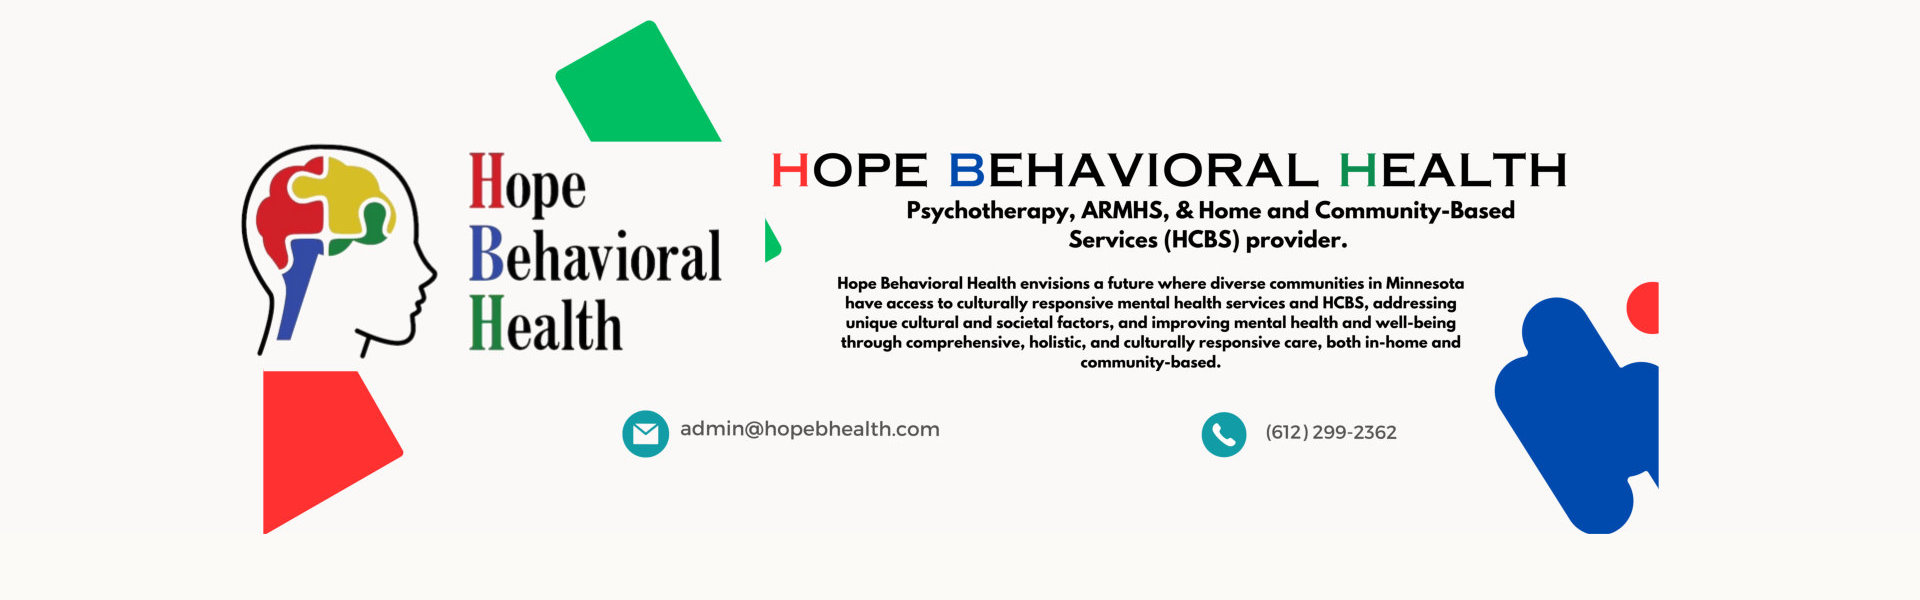 Hope Behavioral Health